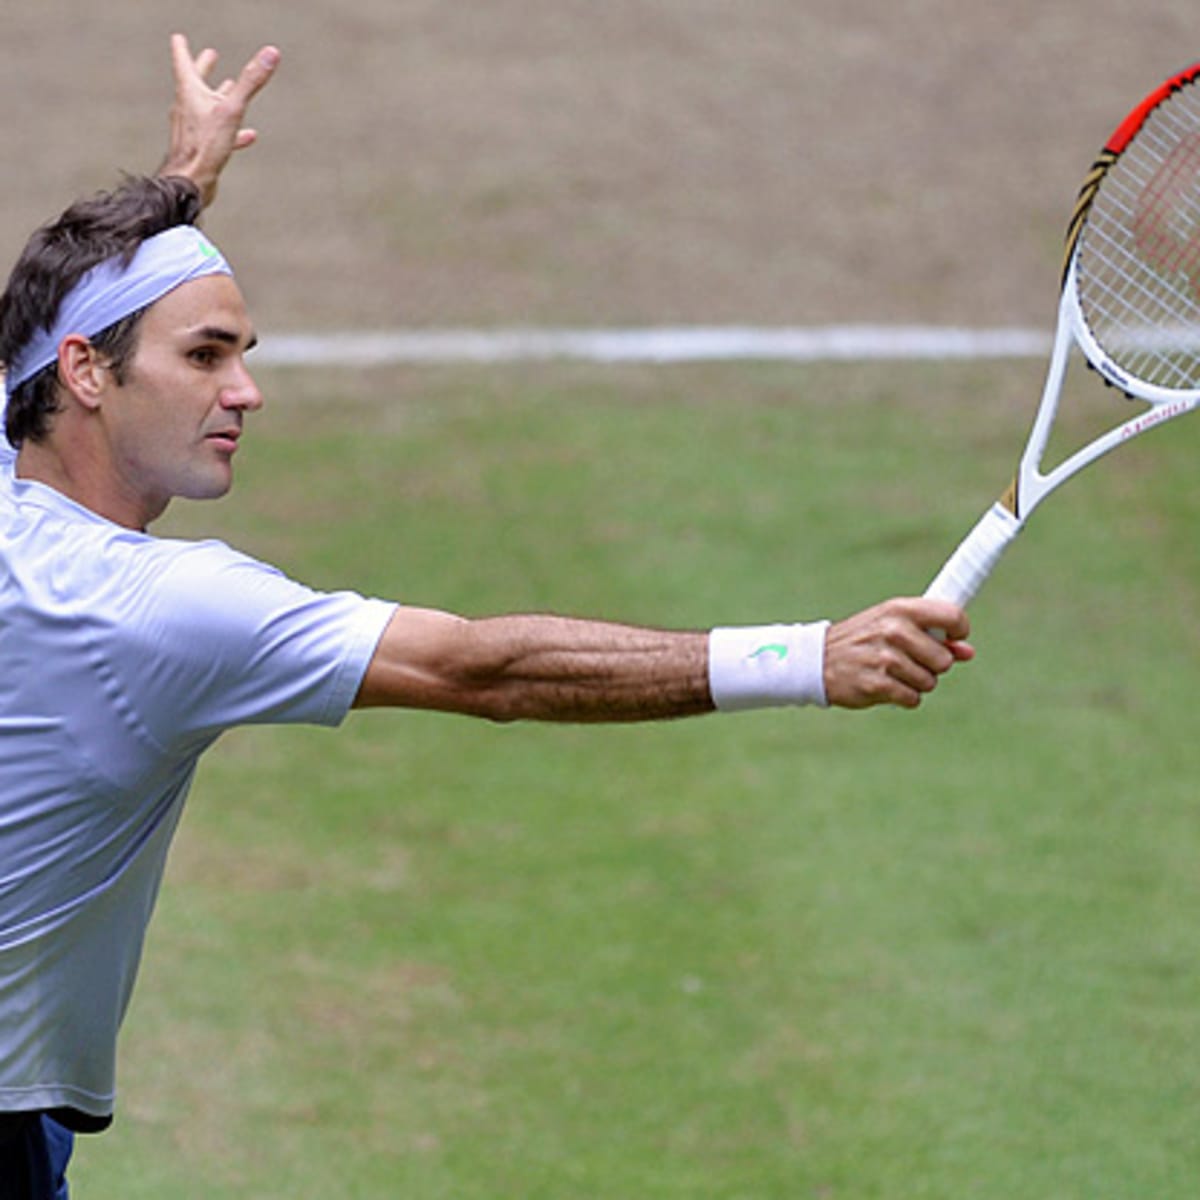 contrast Bedienen Bediening mogelijk Roger Federer to try new, larger racket - Sports Illustrated